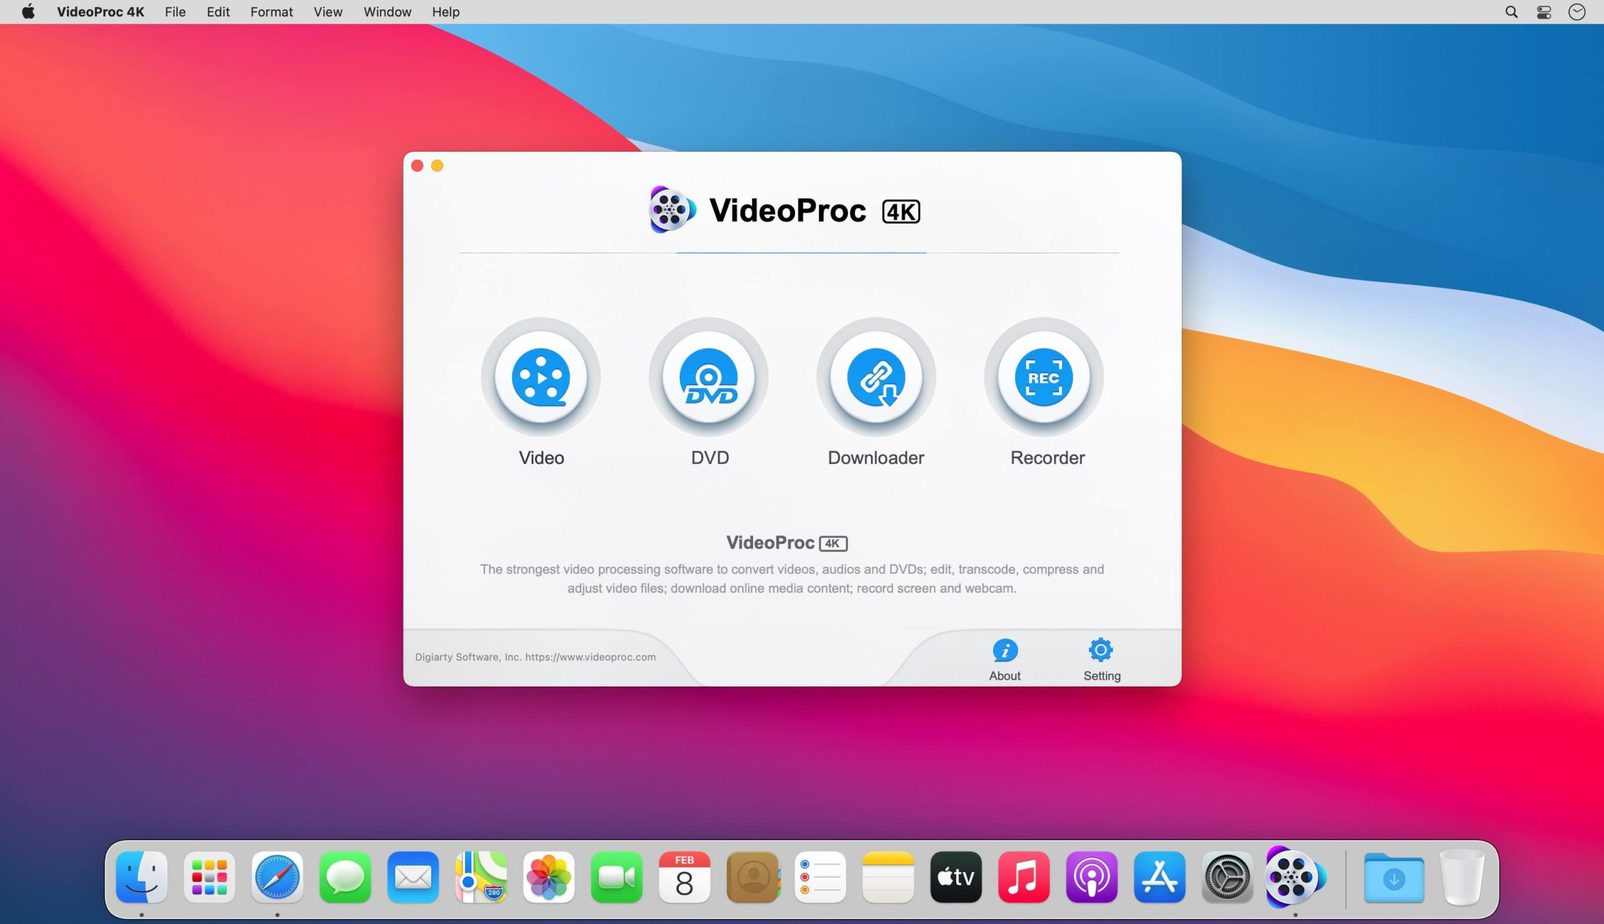 VideoProc Converter 4K macOS